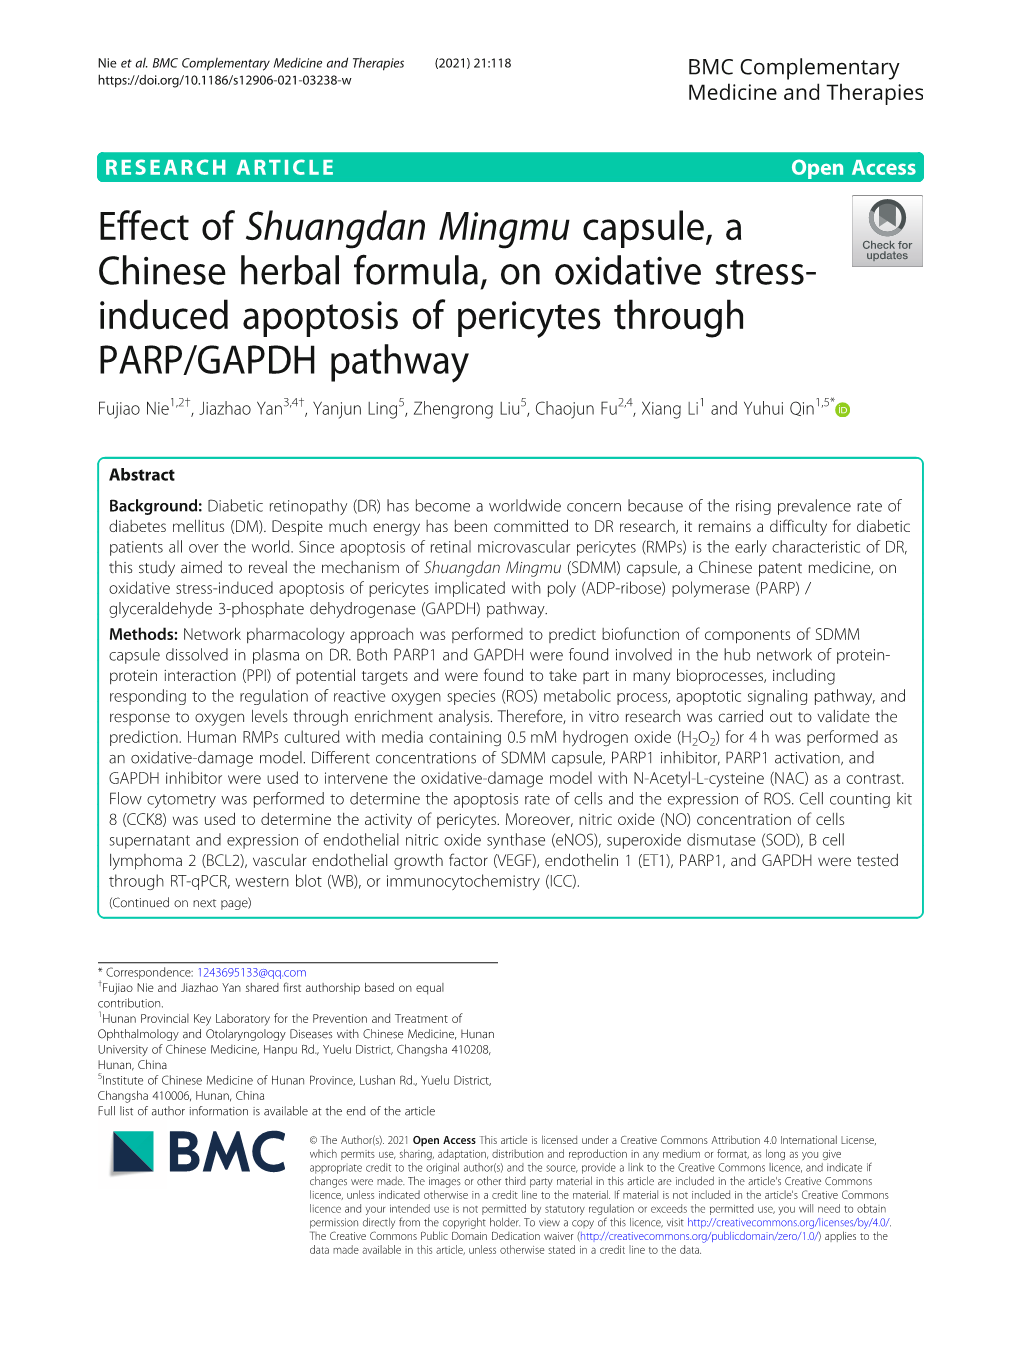 Effect of Shuangdan Mingmu Capsule, a Chinese Herbal Formula, on Oxidative Stress-Induced Apoptosis of Pericytes Through PARP/GA